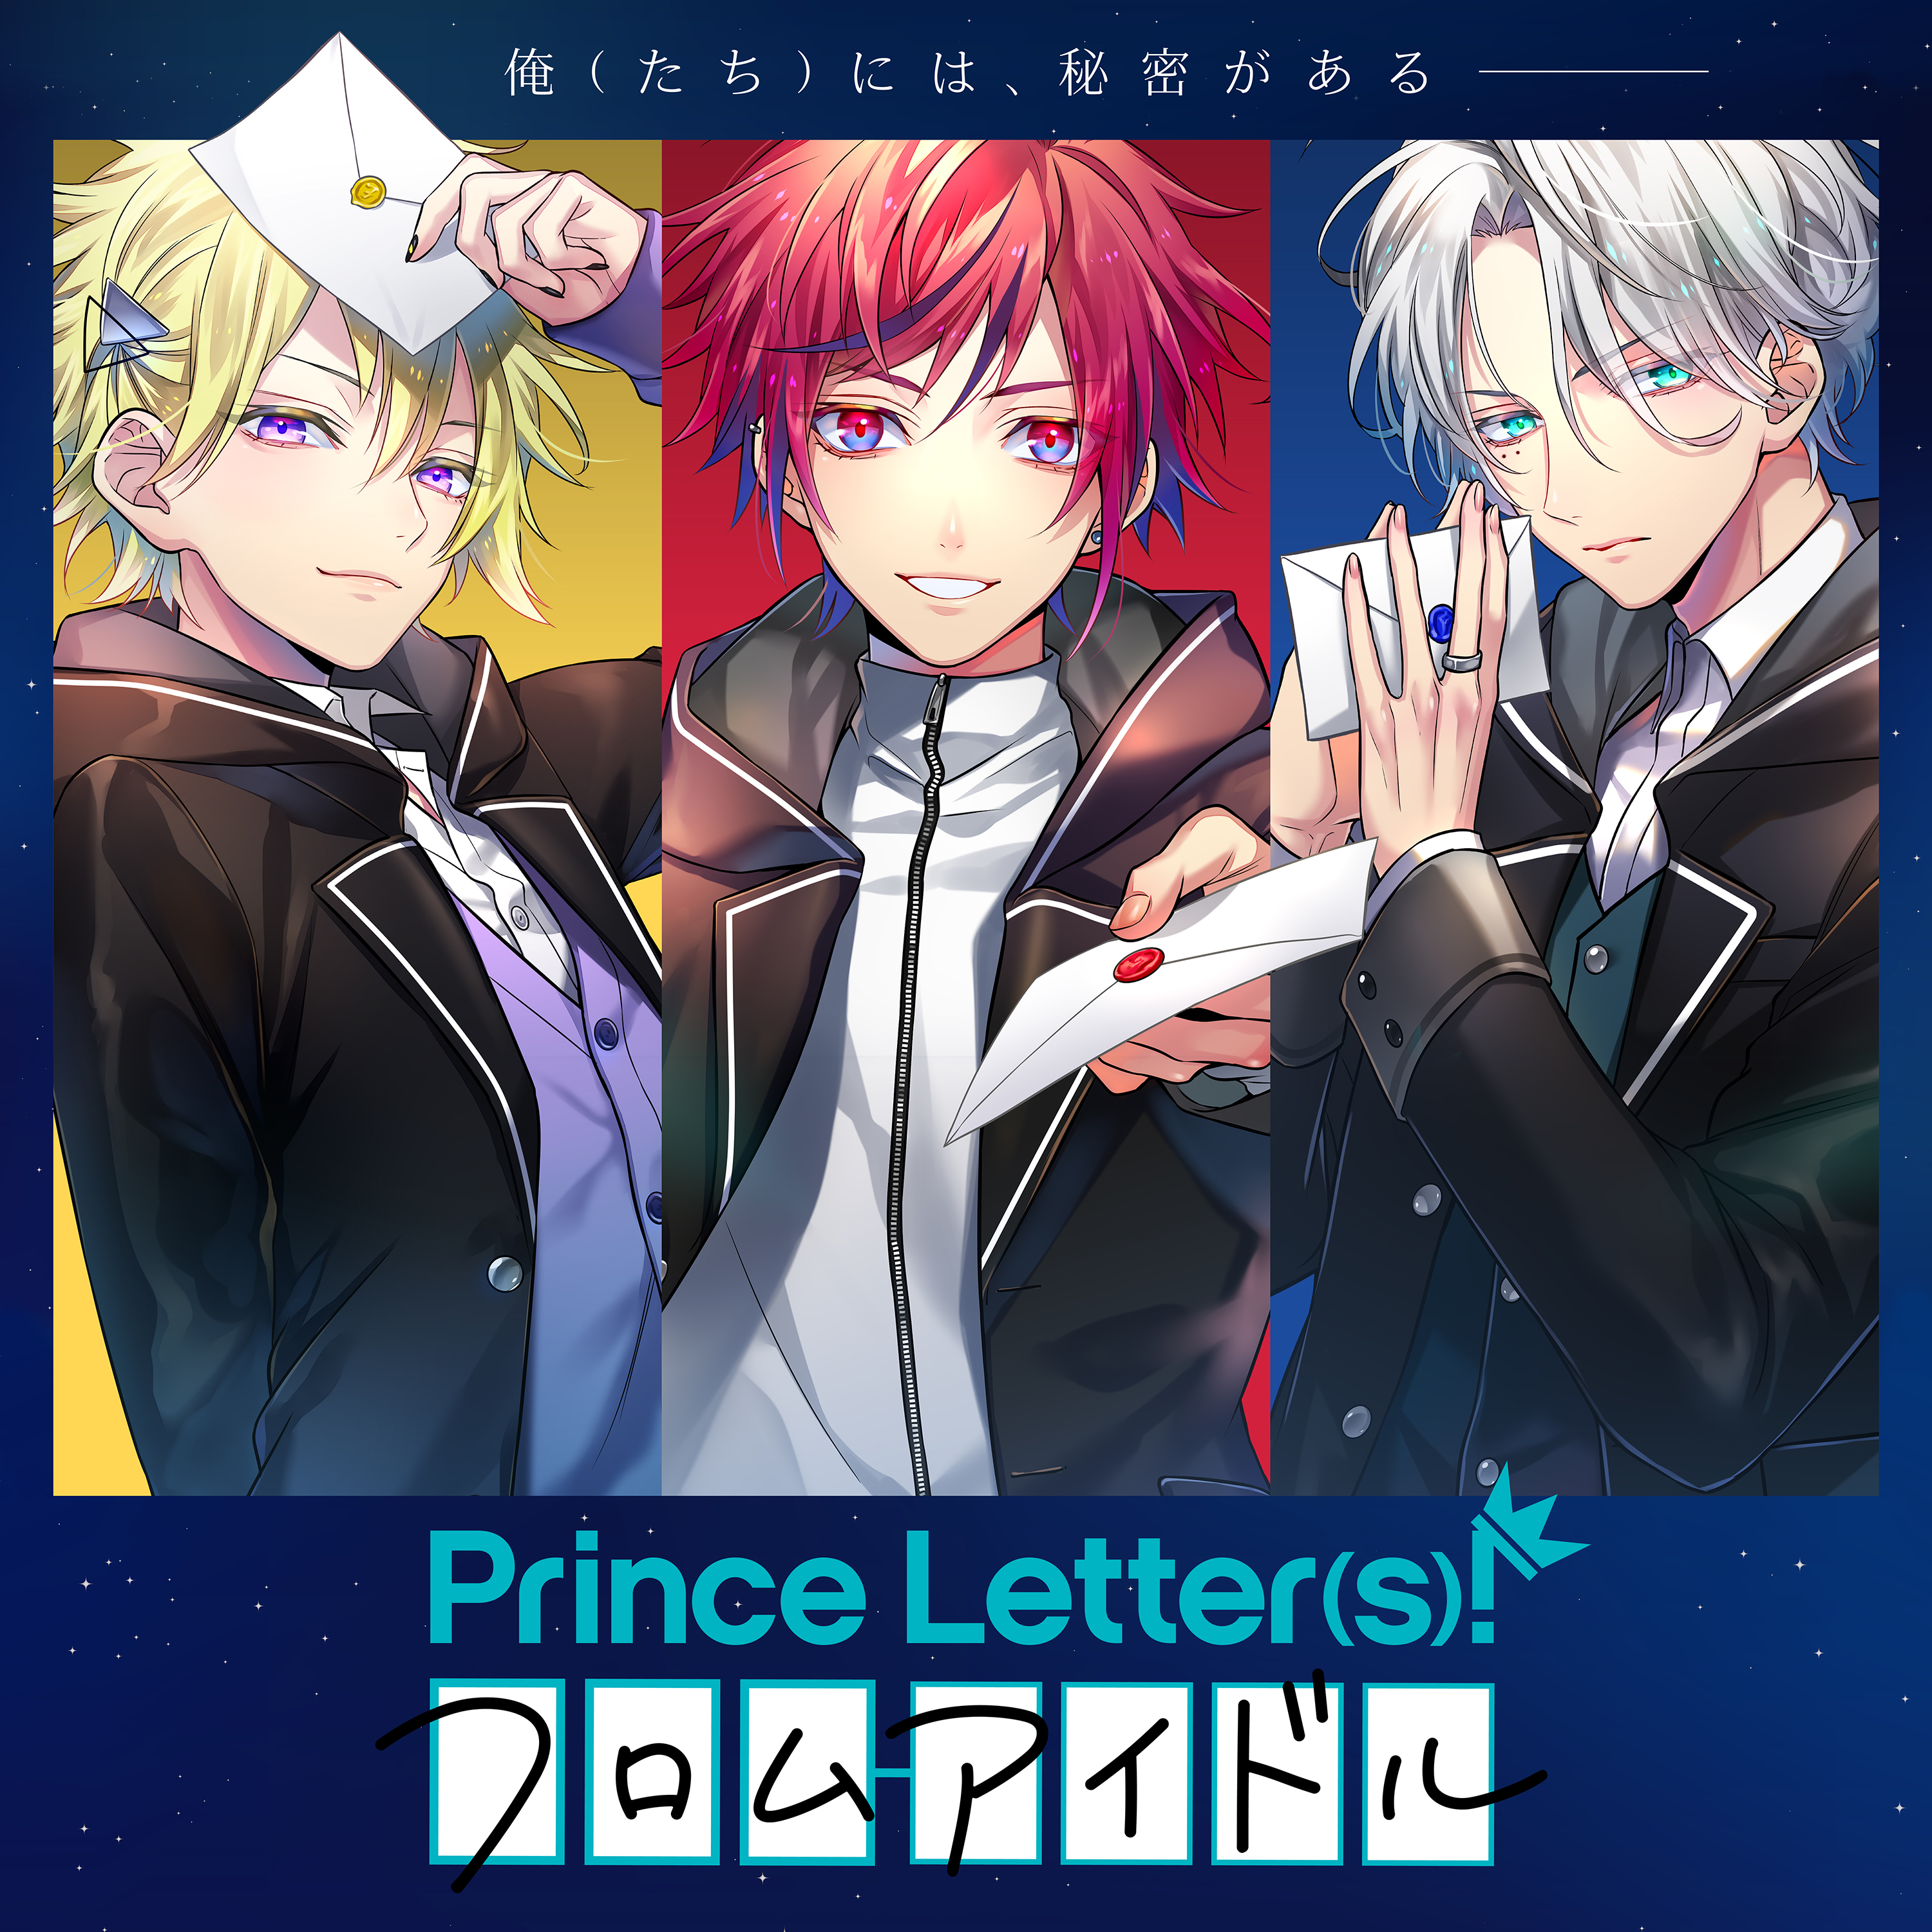 Prince Letter(s)! フロムアイドル